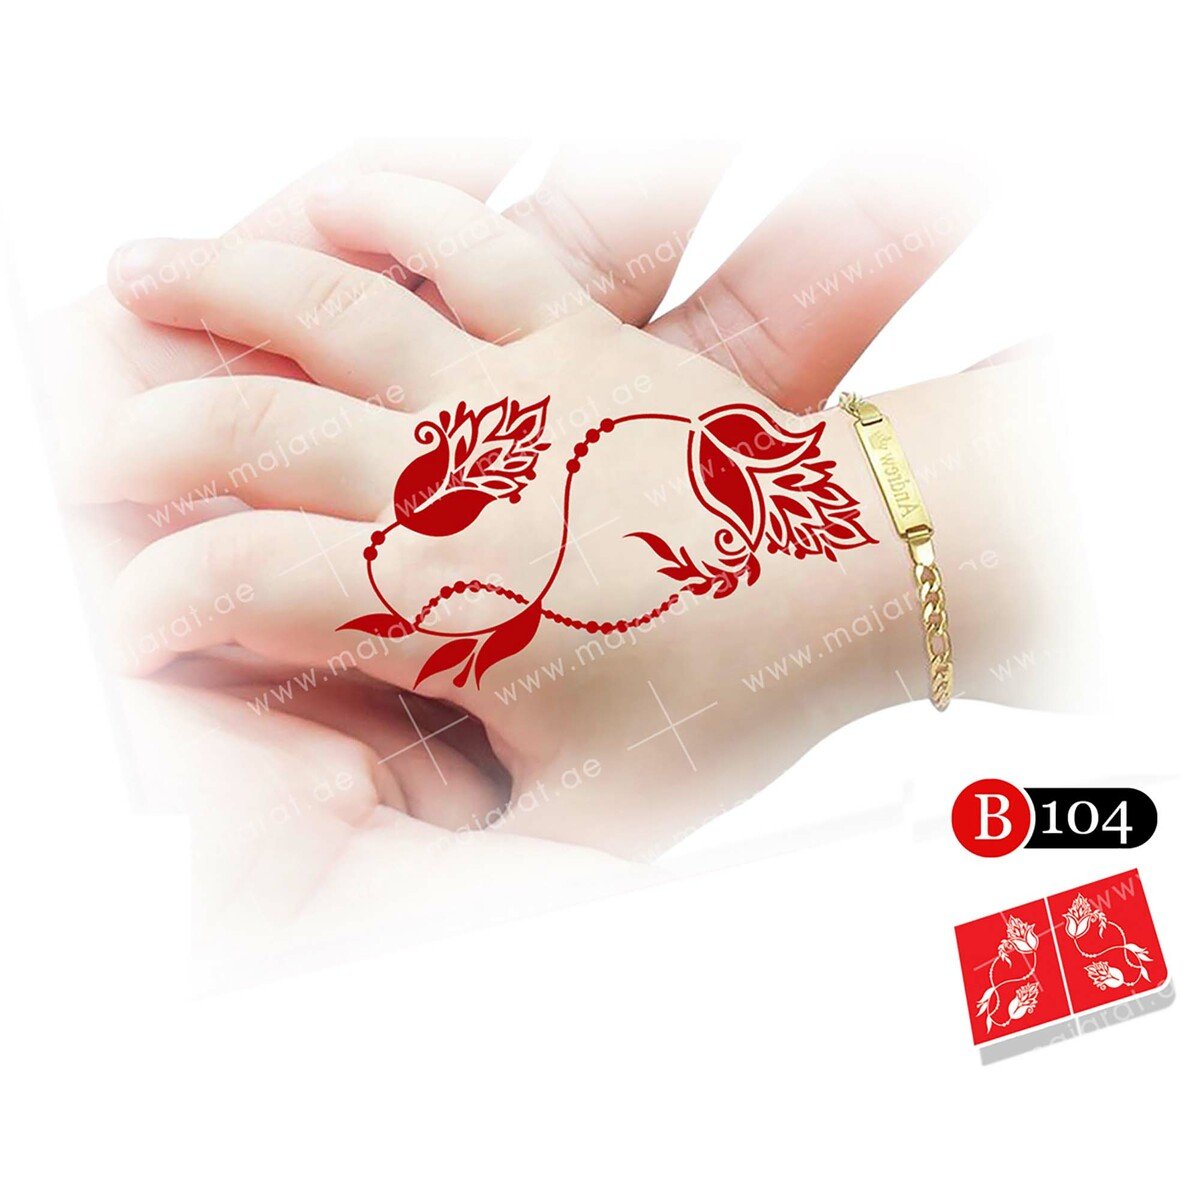 Majarat Henna Design Sticker Baby B104 15x10cm